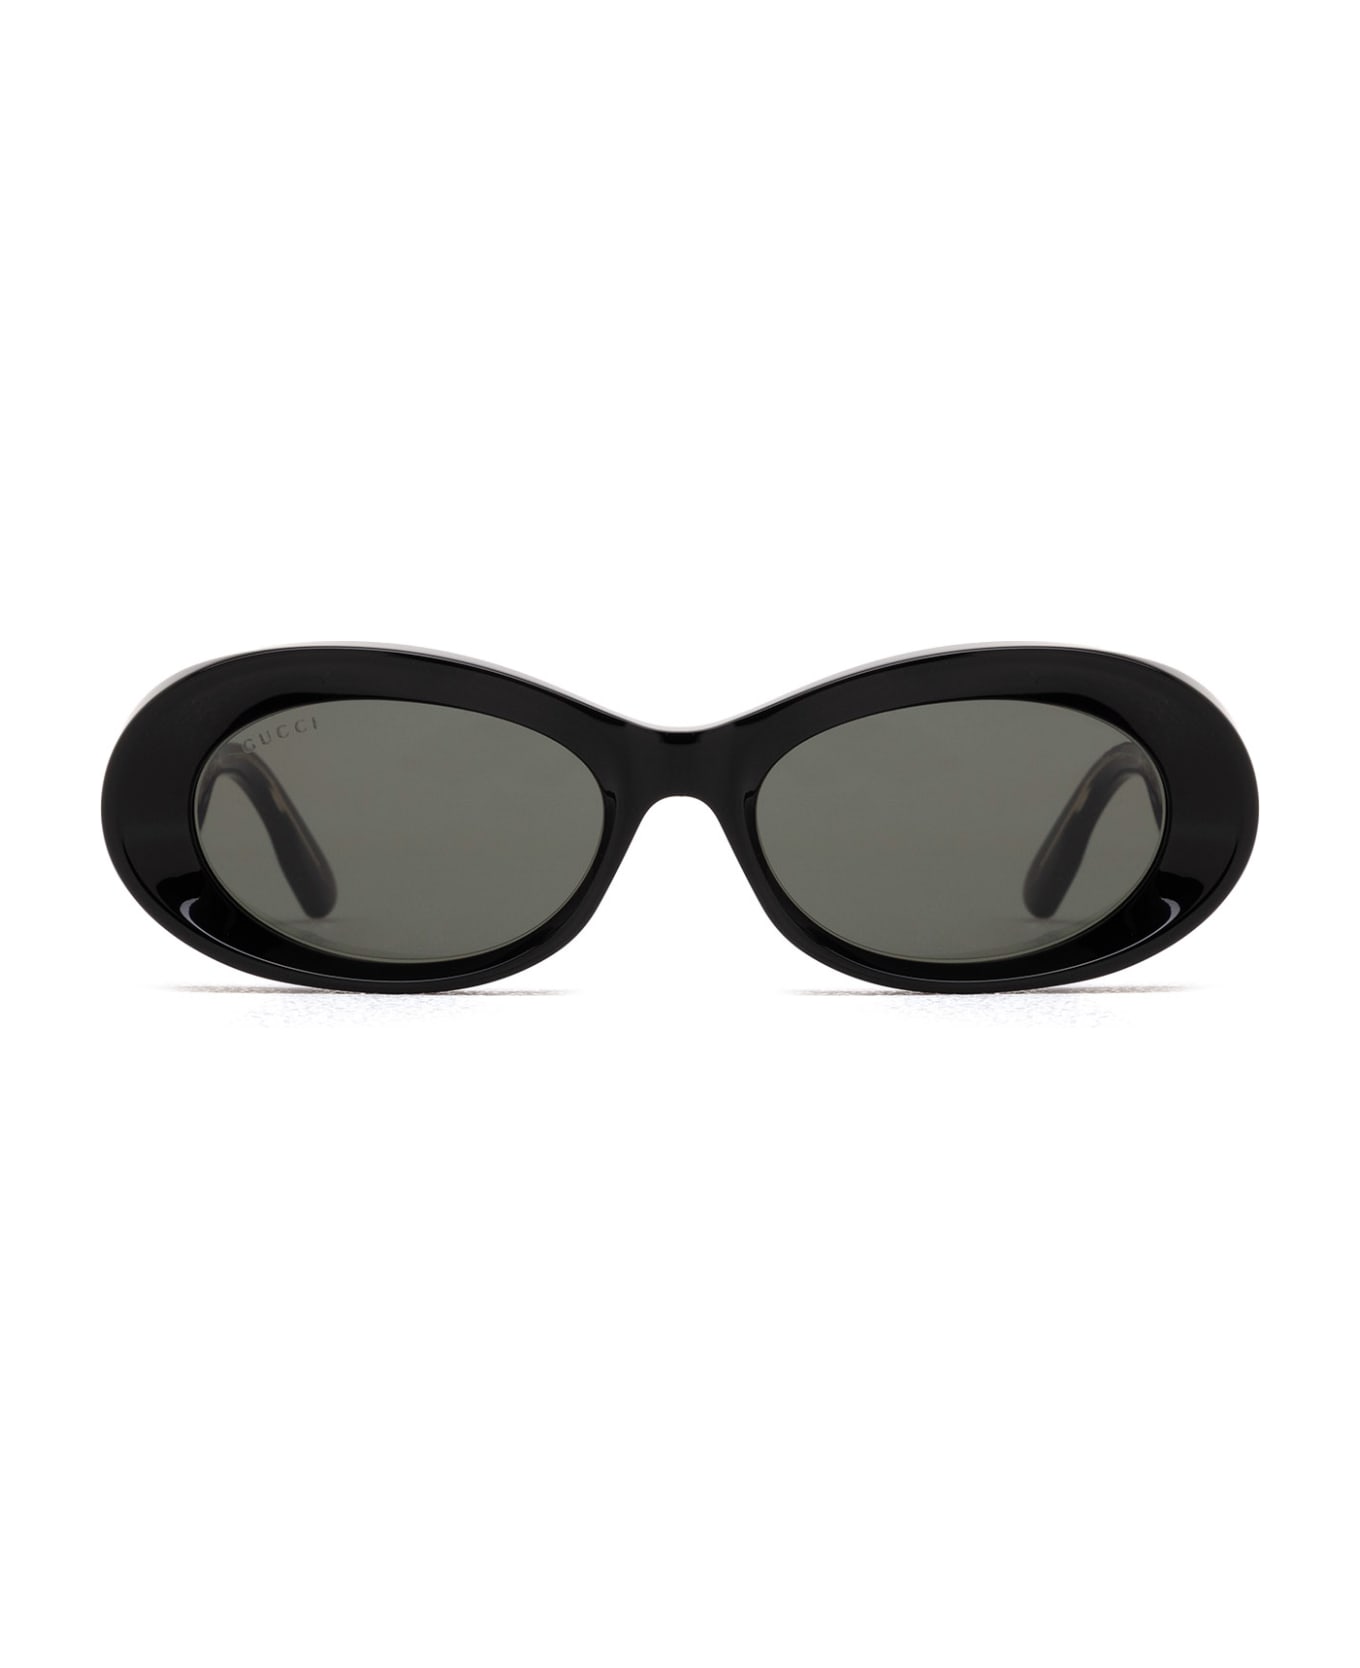 Gucci Eyewear Gg1527s Black Sunglasses - Black